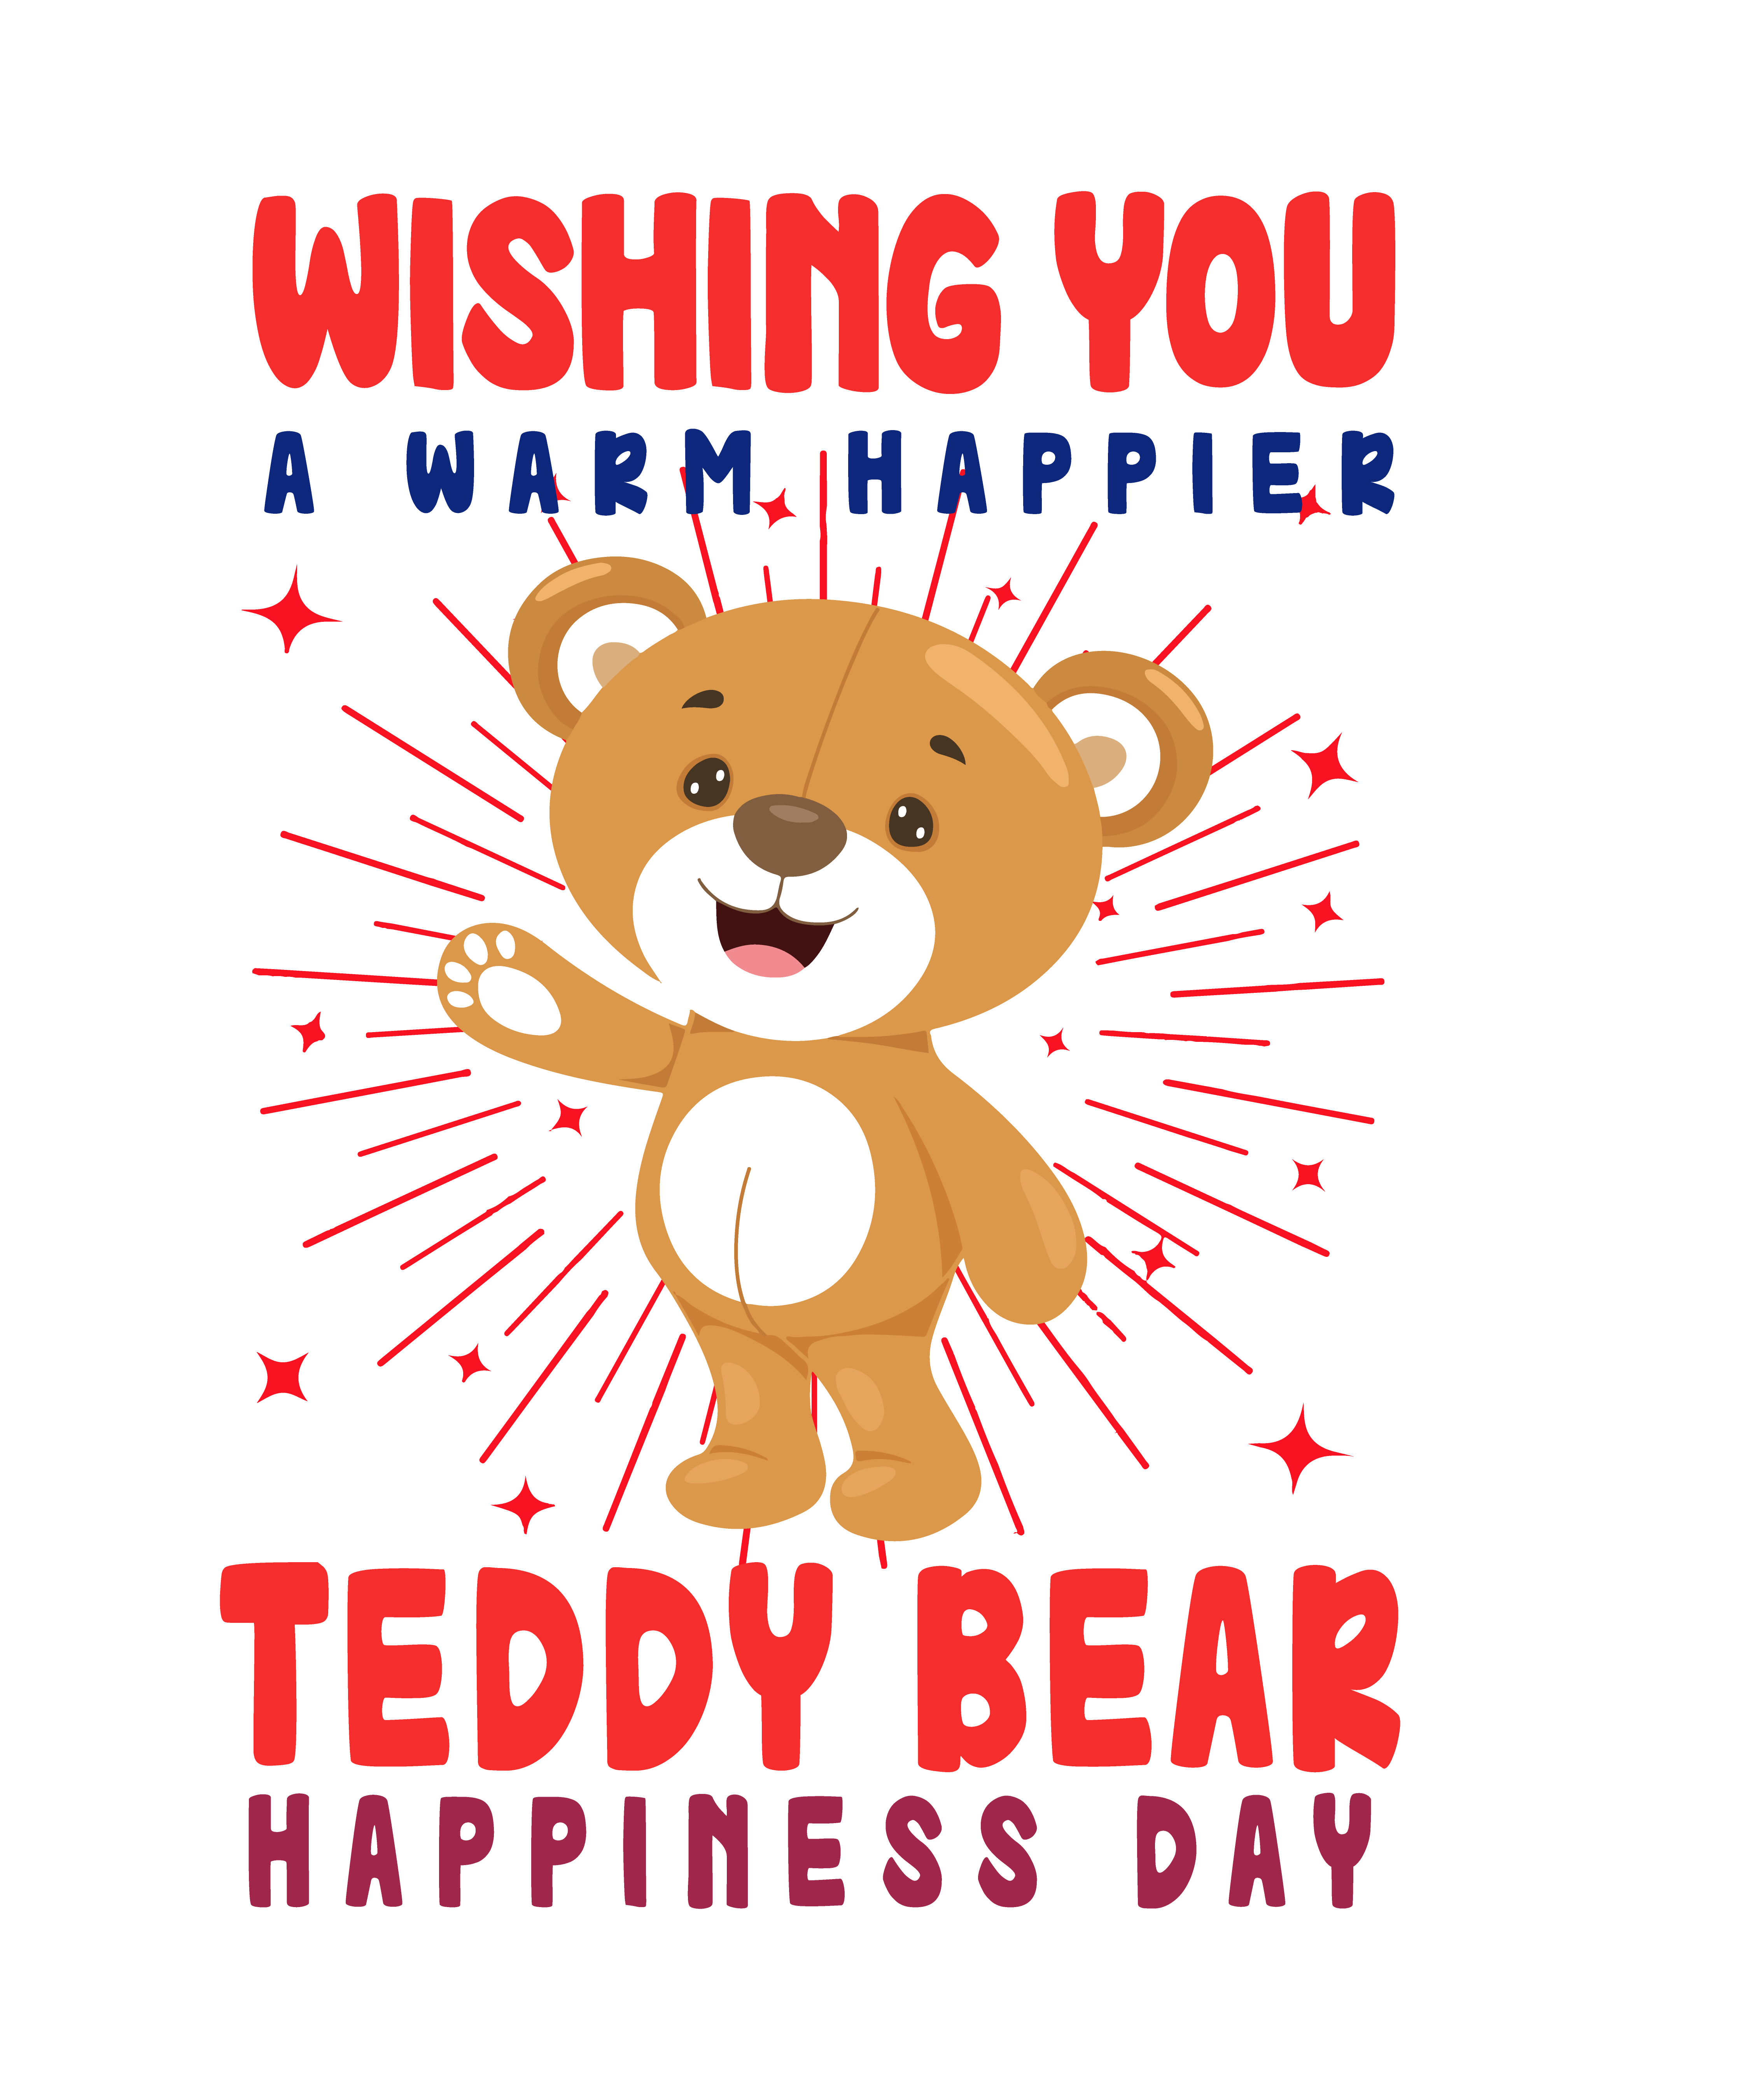 Wishing you a warm happier teddy bear happiness day t shirt design